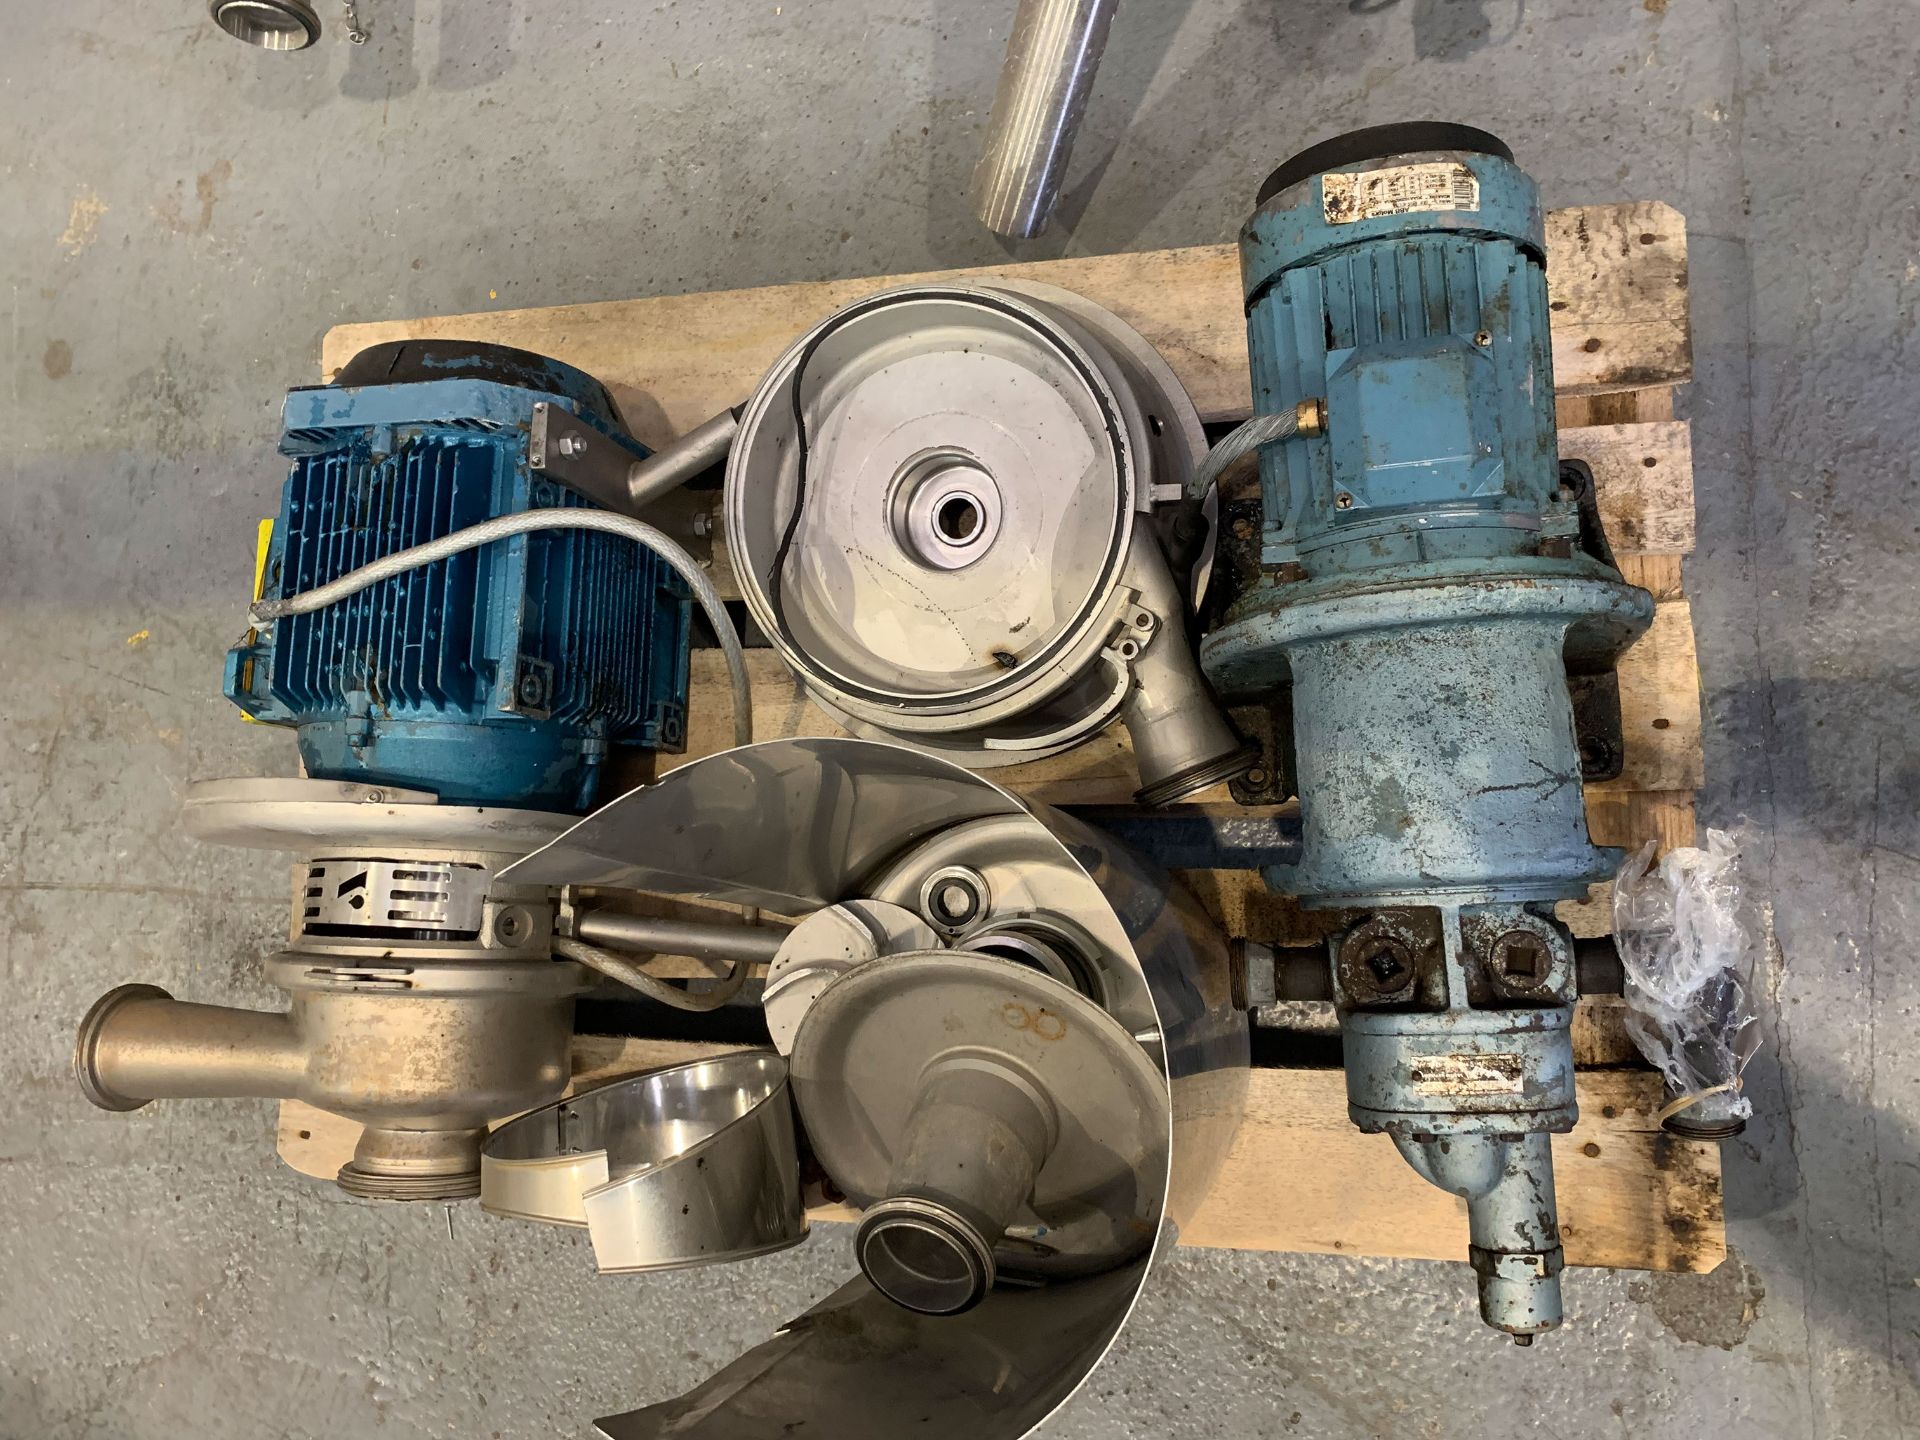 2x Motor Driven Pump Units and a Dismantled Pump - Image 2 of 4